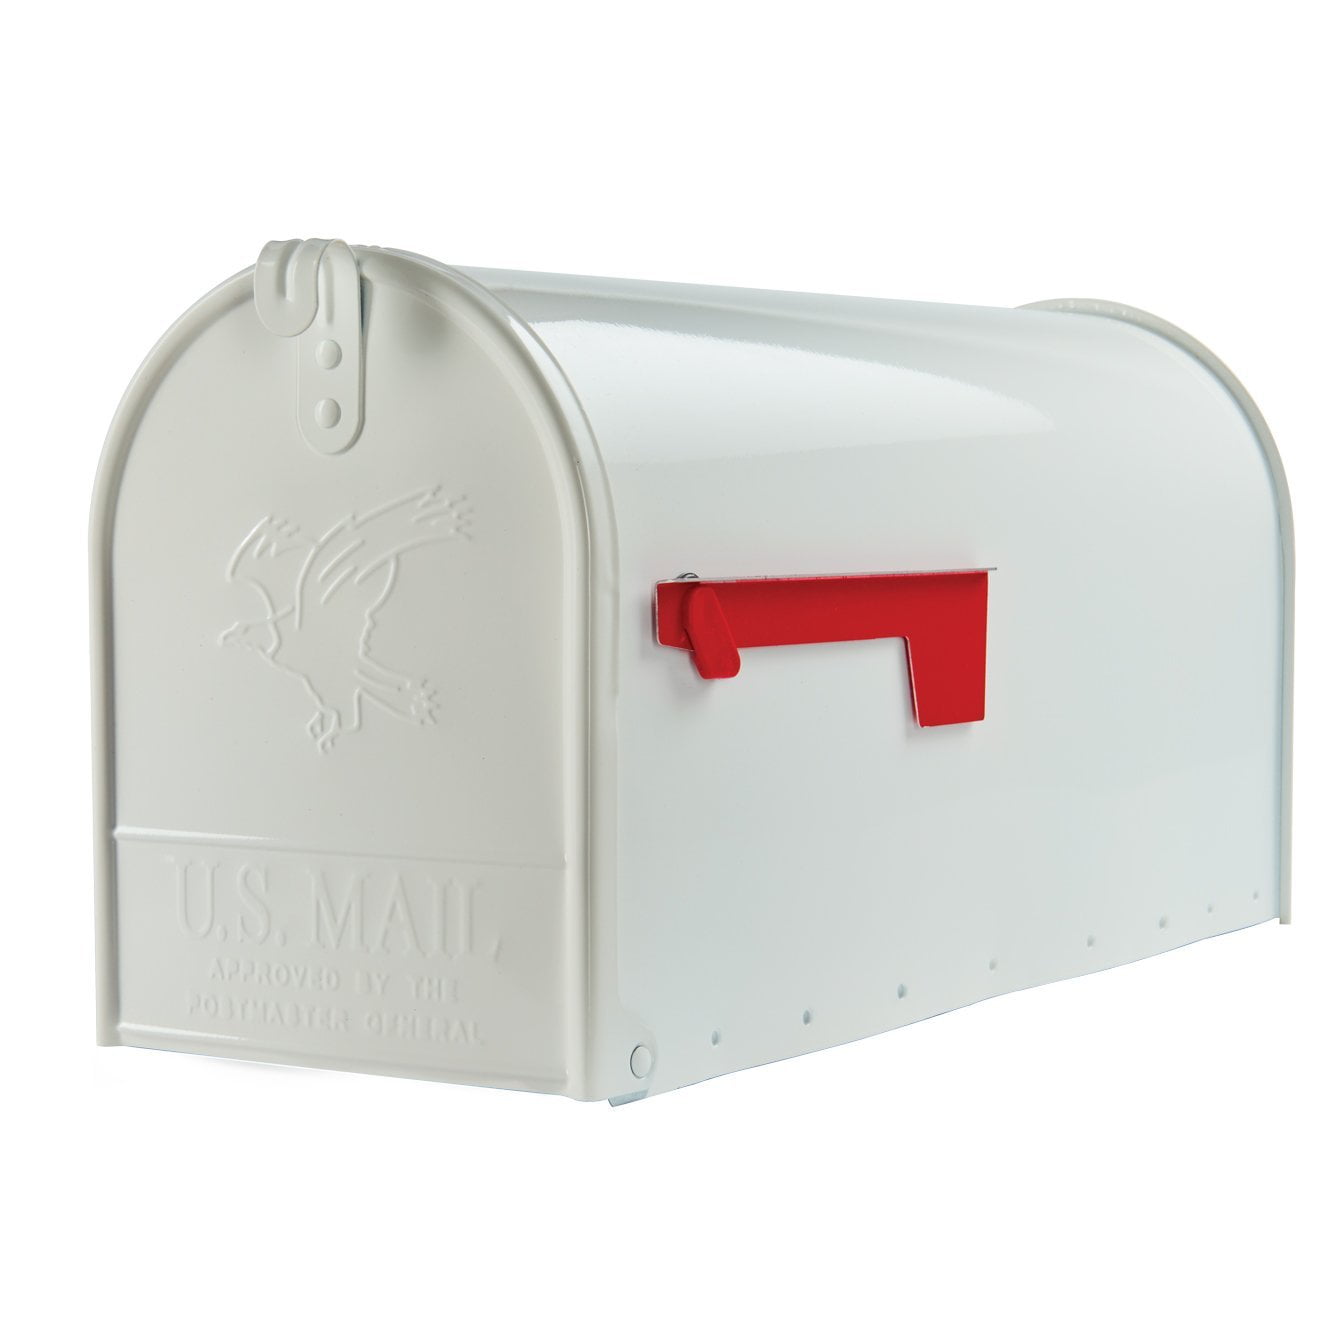 Solar Group E11w White Elite Premium Steel Mailbox for sale online 